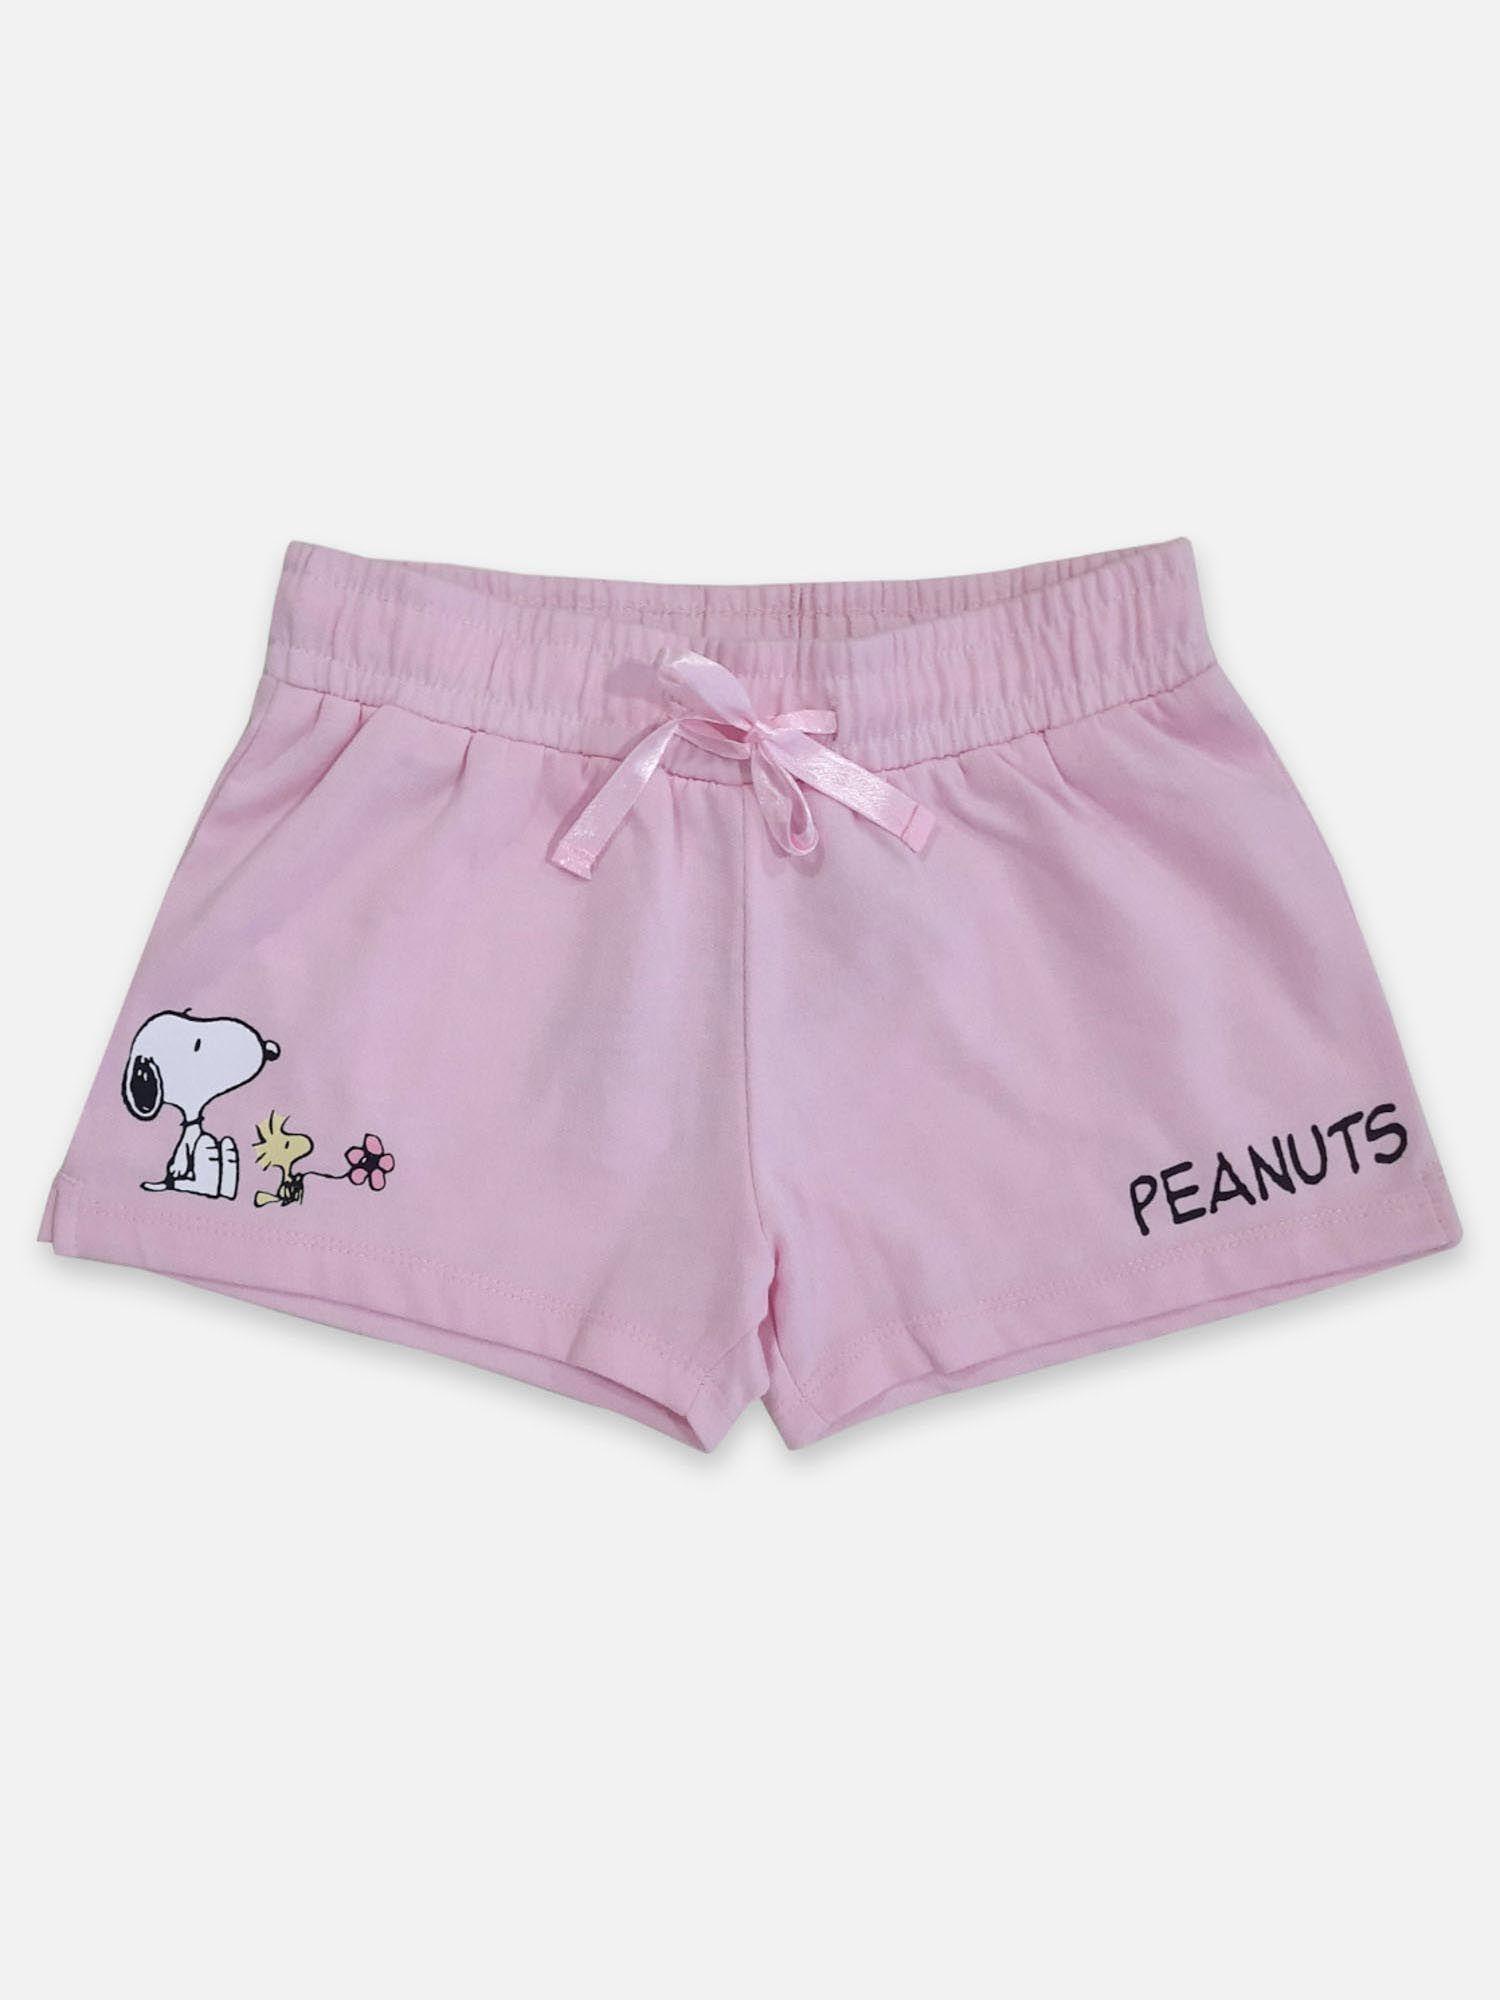 peanuts printed pink shorts for girls